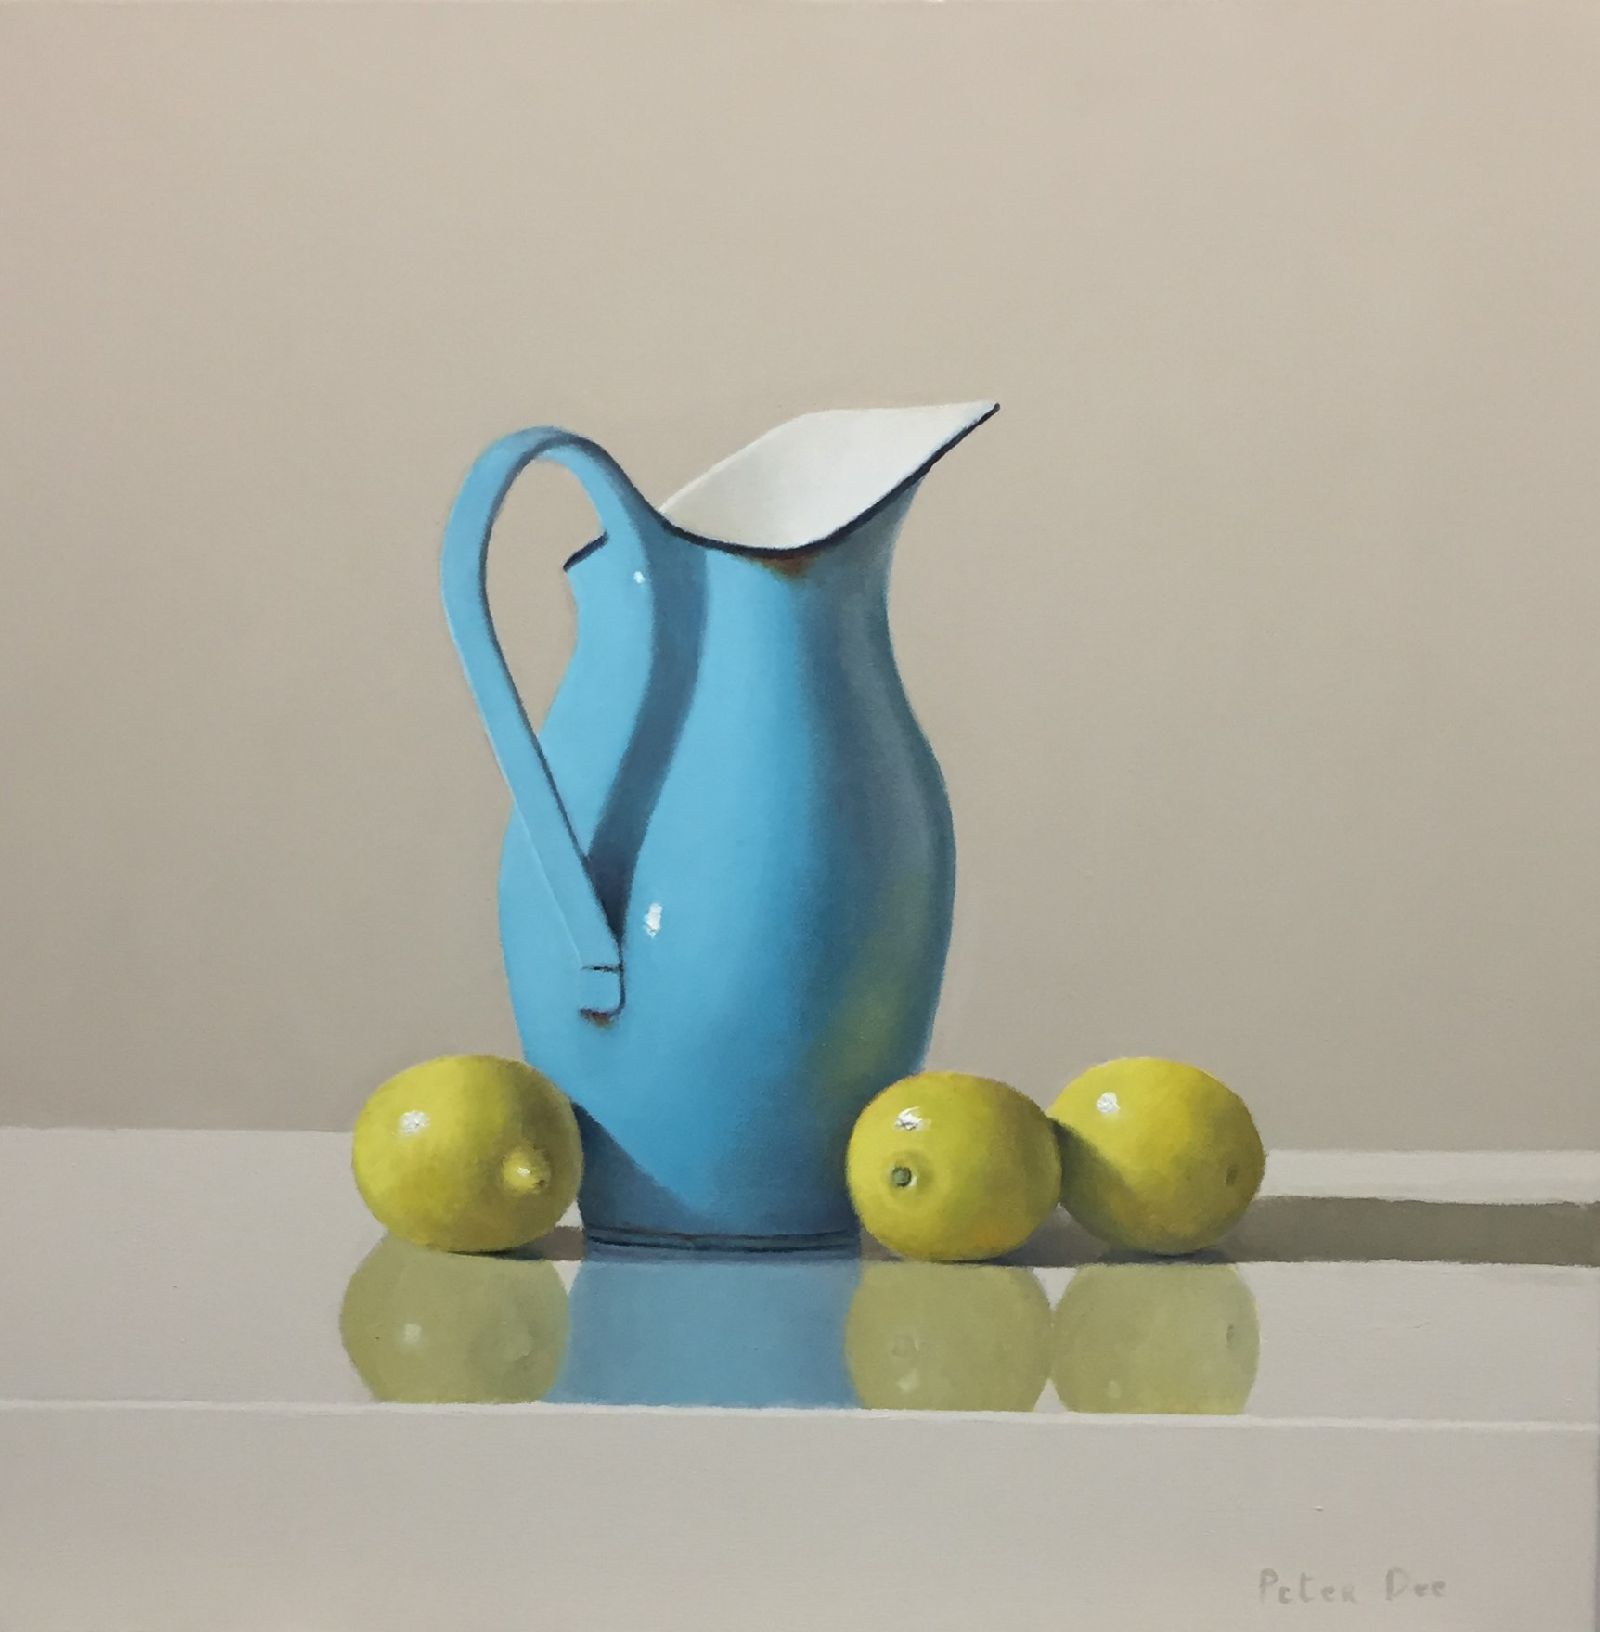 Turquise Enamelware with Lemons by Peter Dee